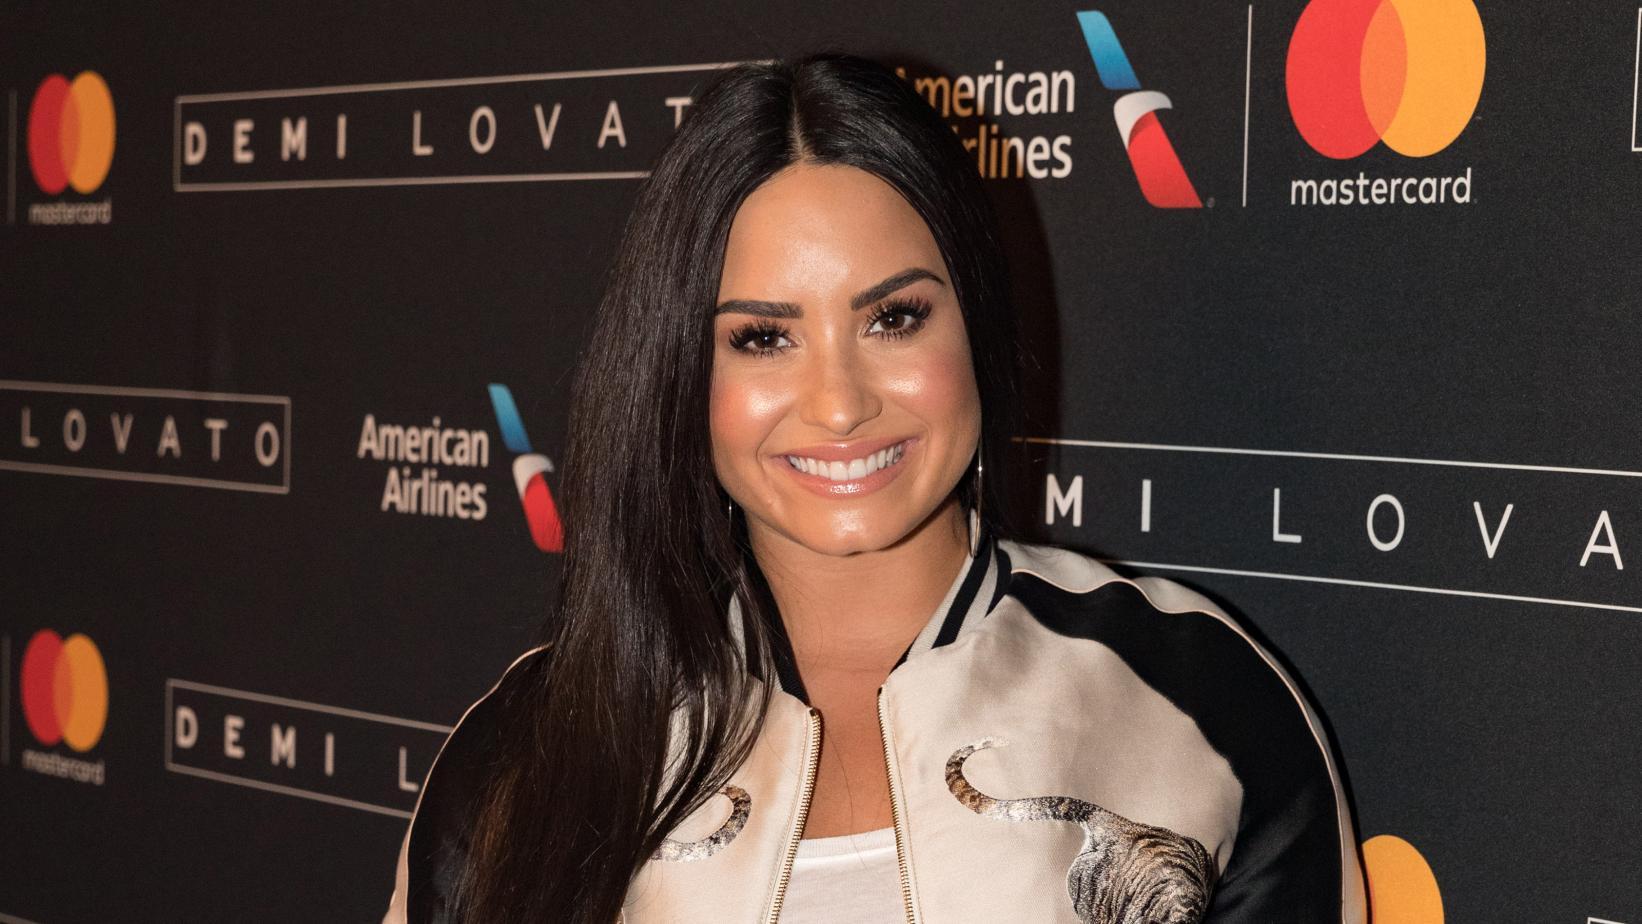 Listen: Luis Fonsi, Demi Lovato “Échame La Culpa